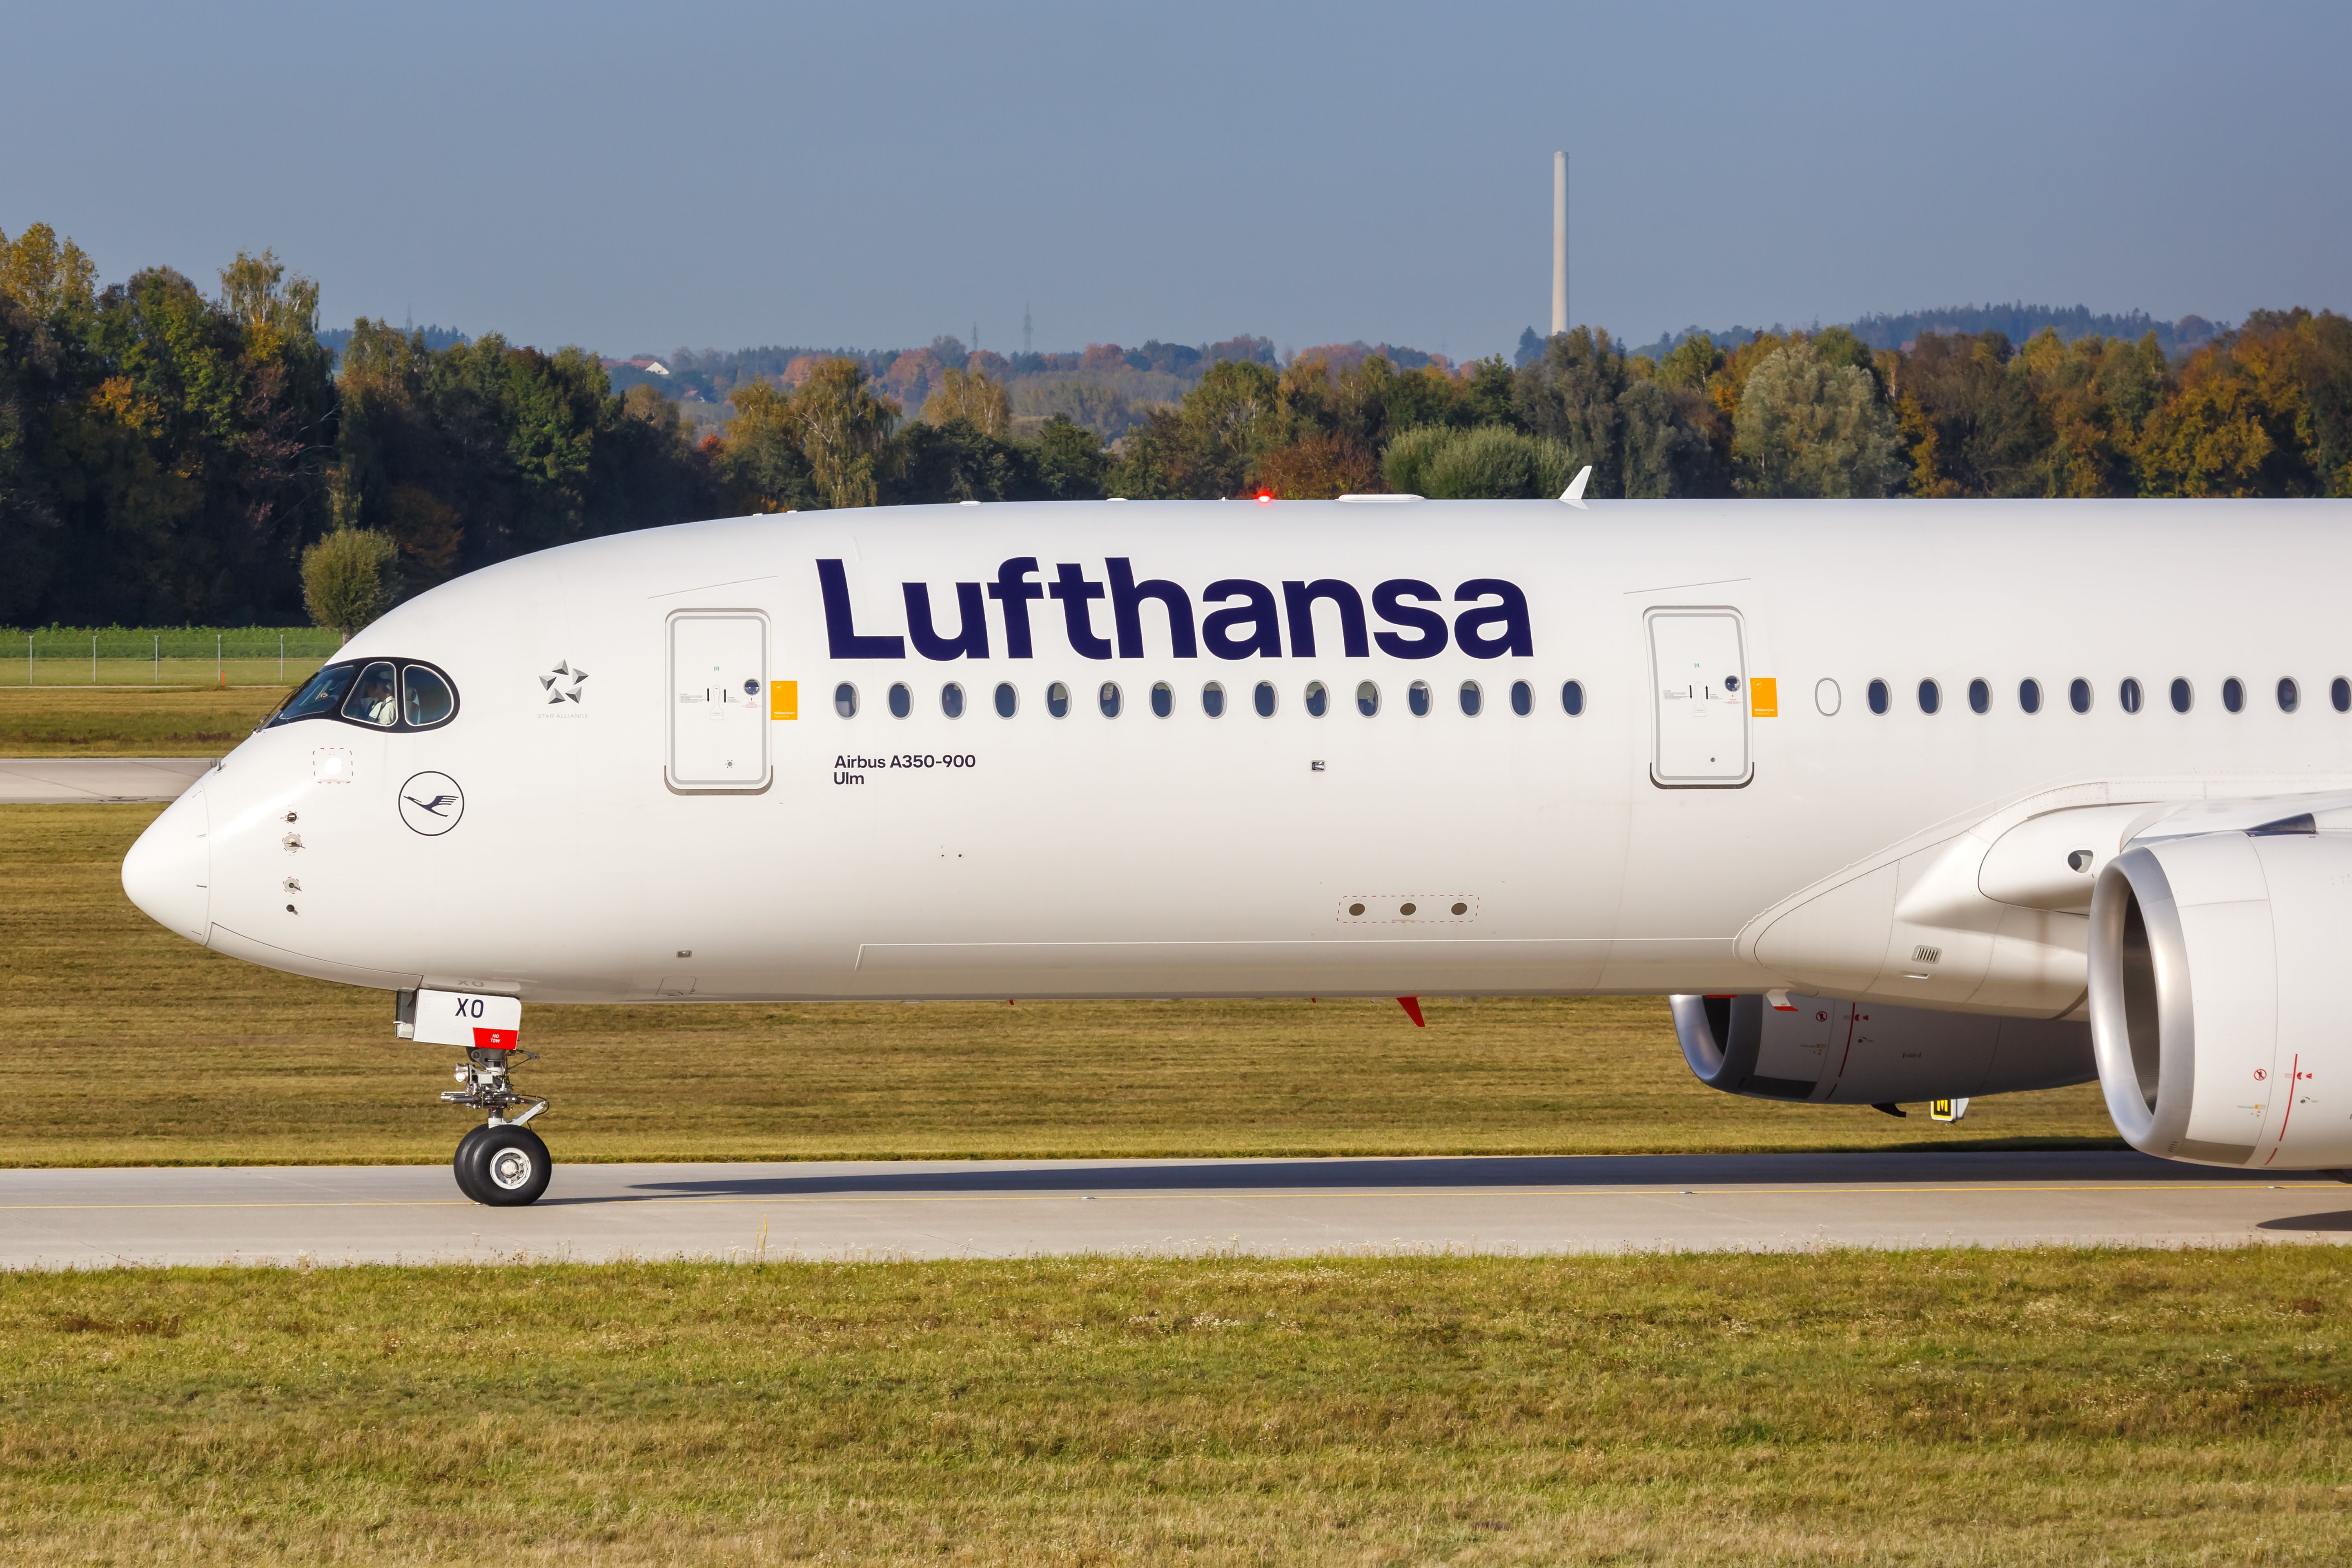 Lufthansa Airbus A350-900 at Munich Airport MUC shutterstock_1841246170